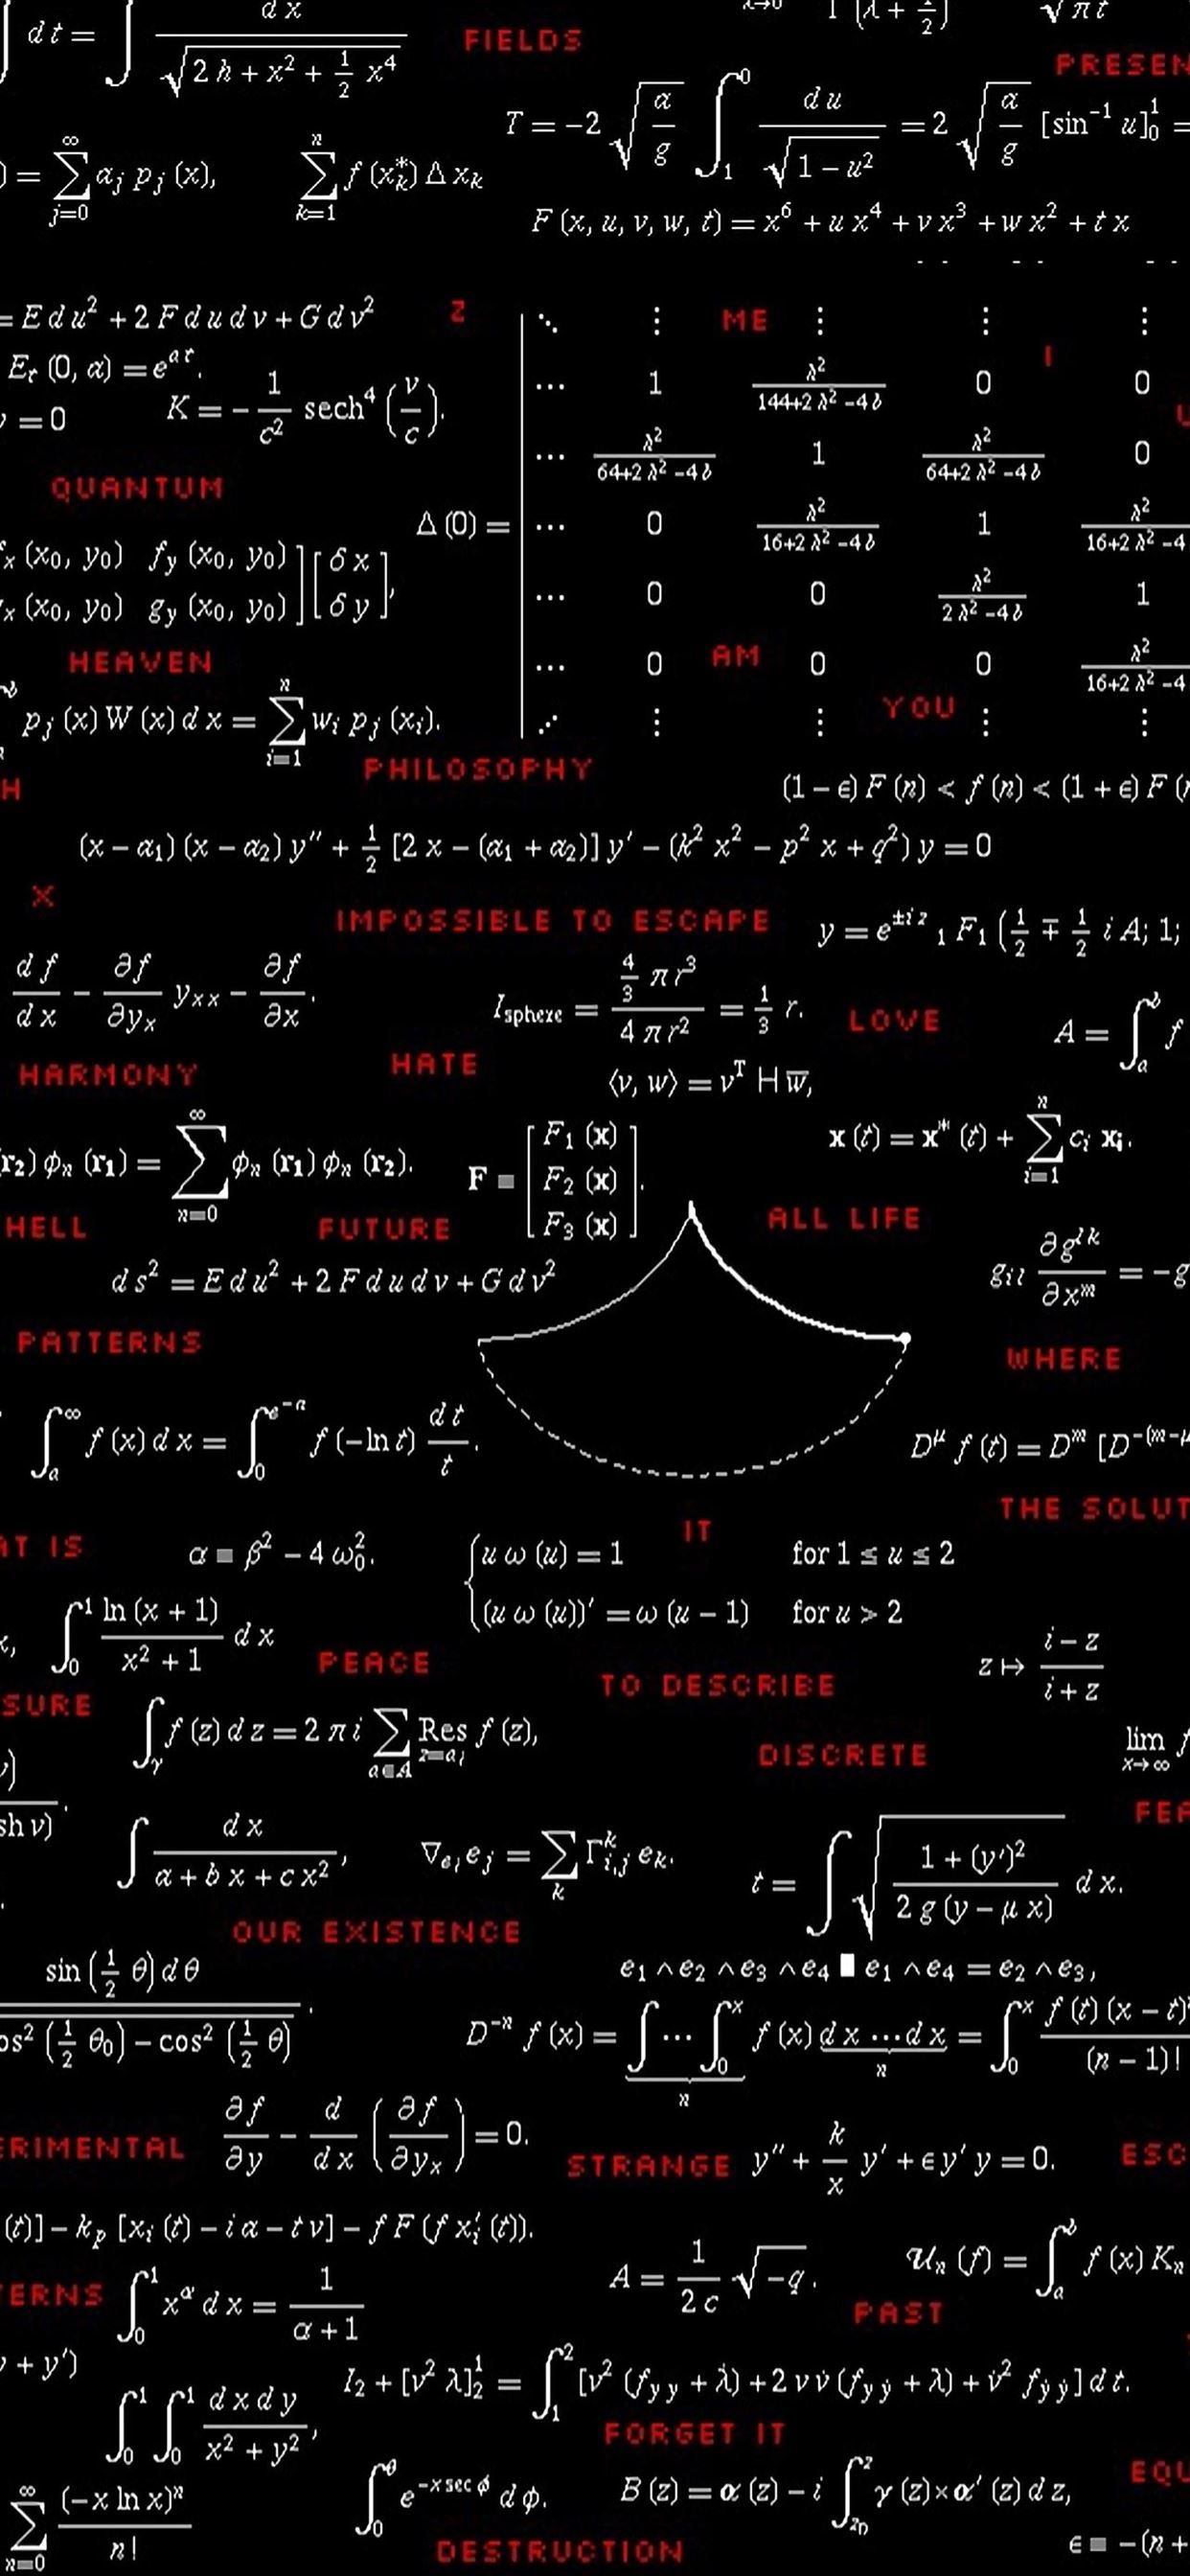 Wallpaper of math equations and formulas - Math